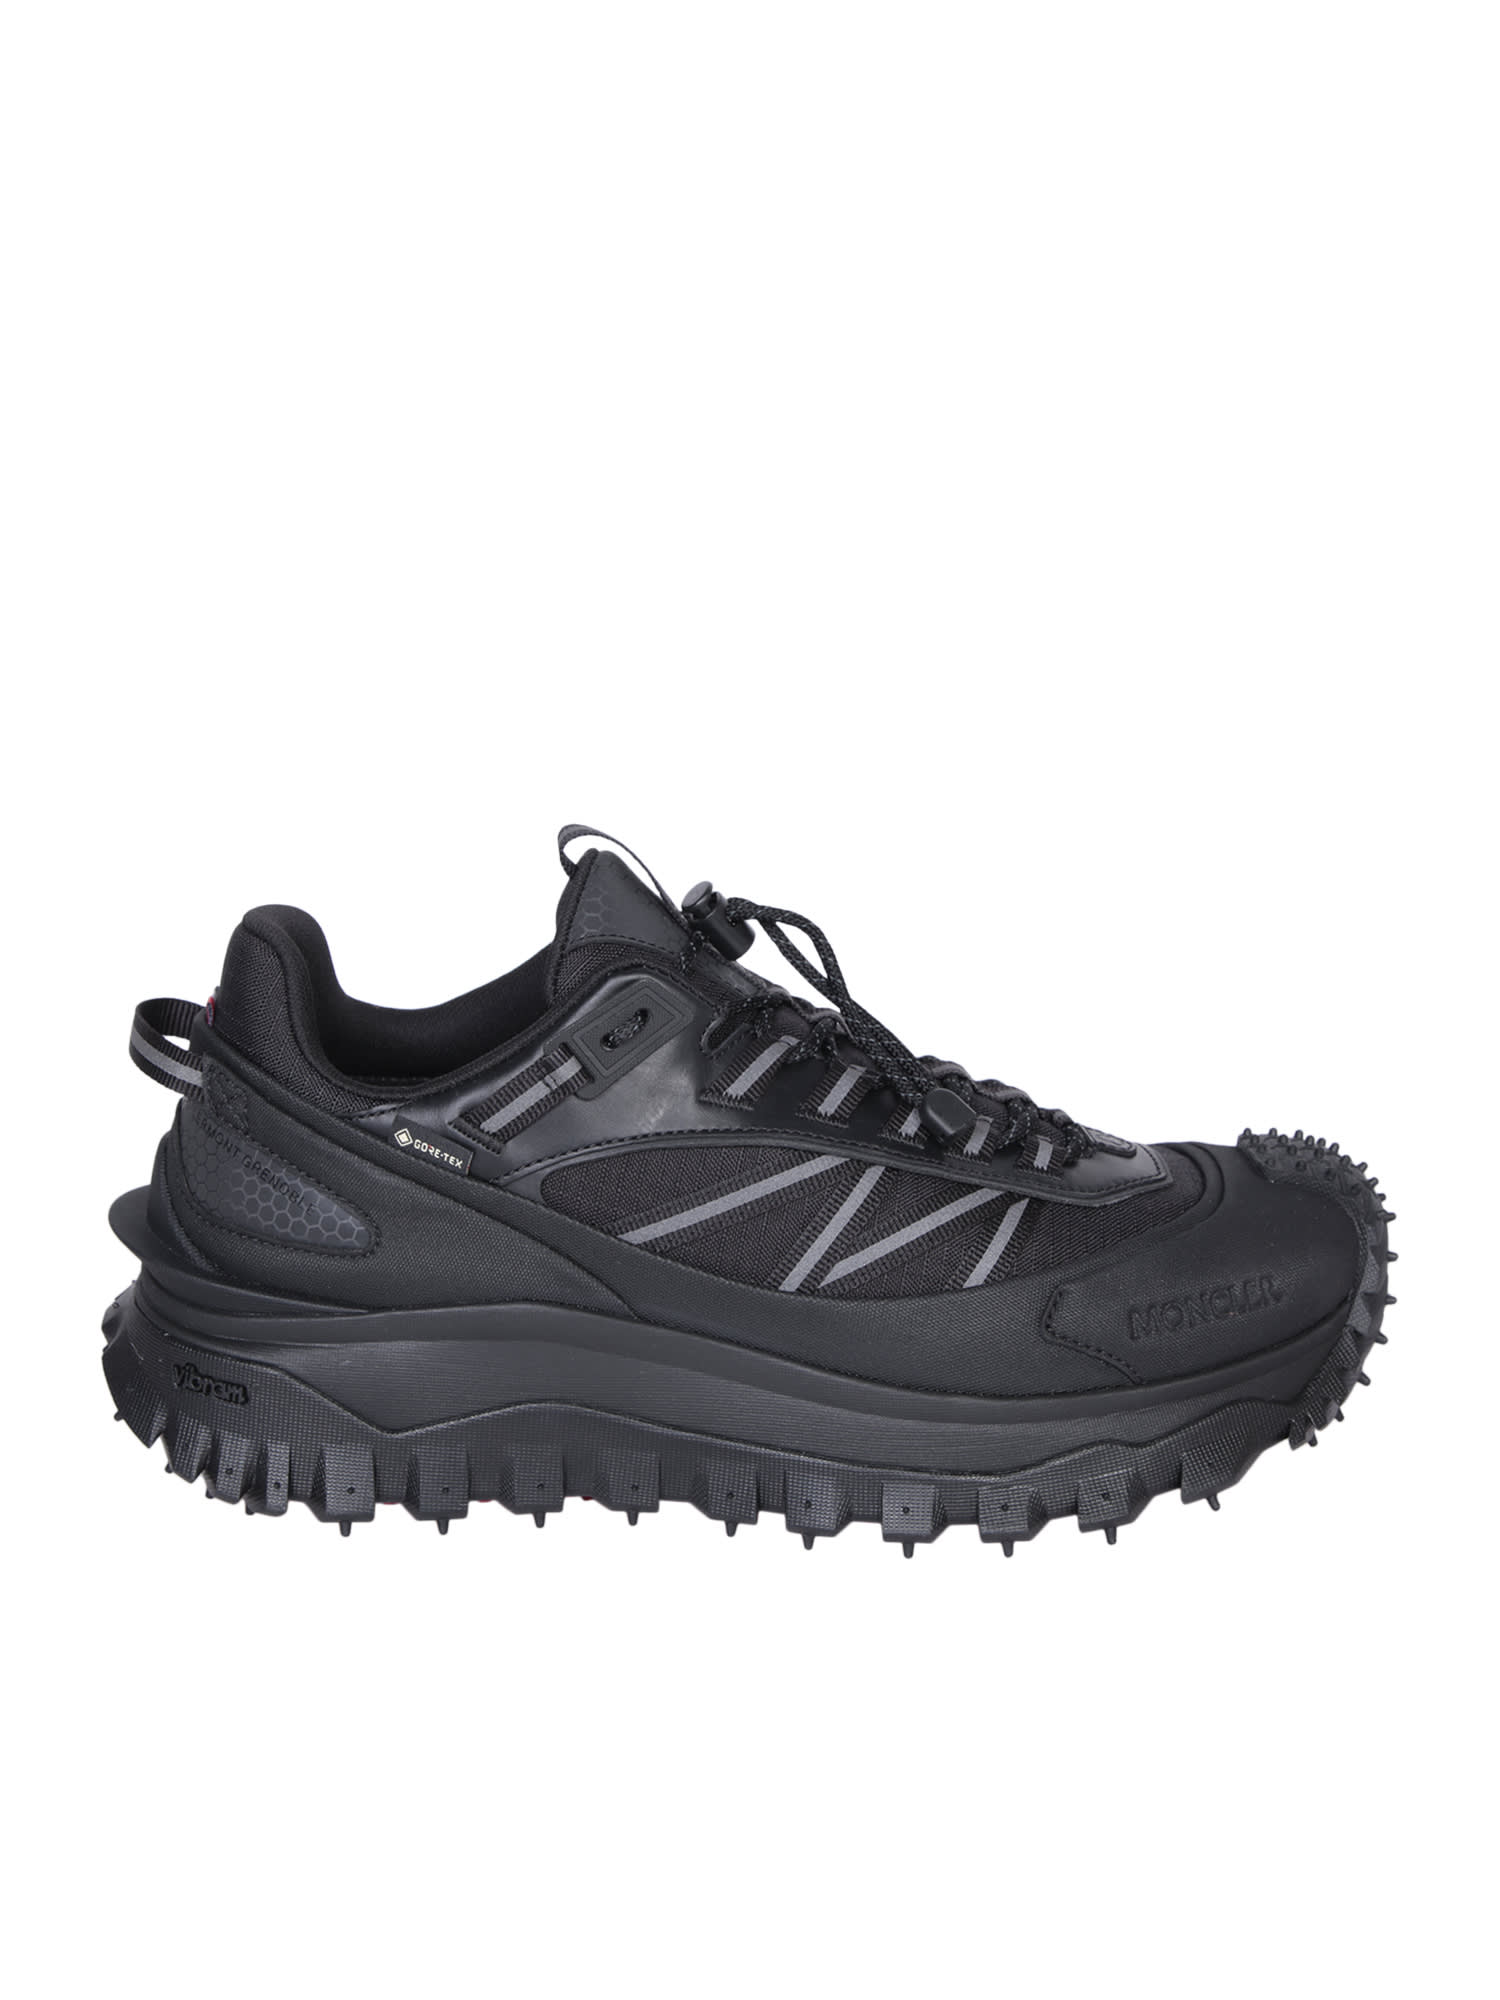 Moncler Trailgrip Gtx Low Black Sneakers